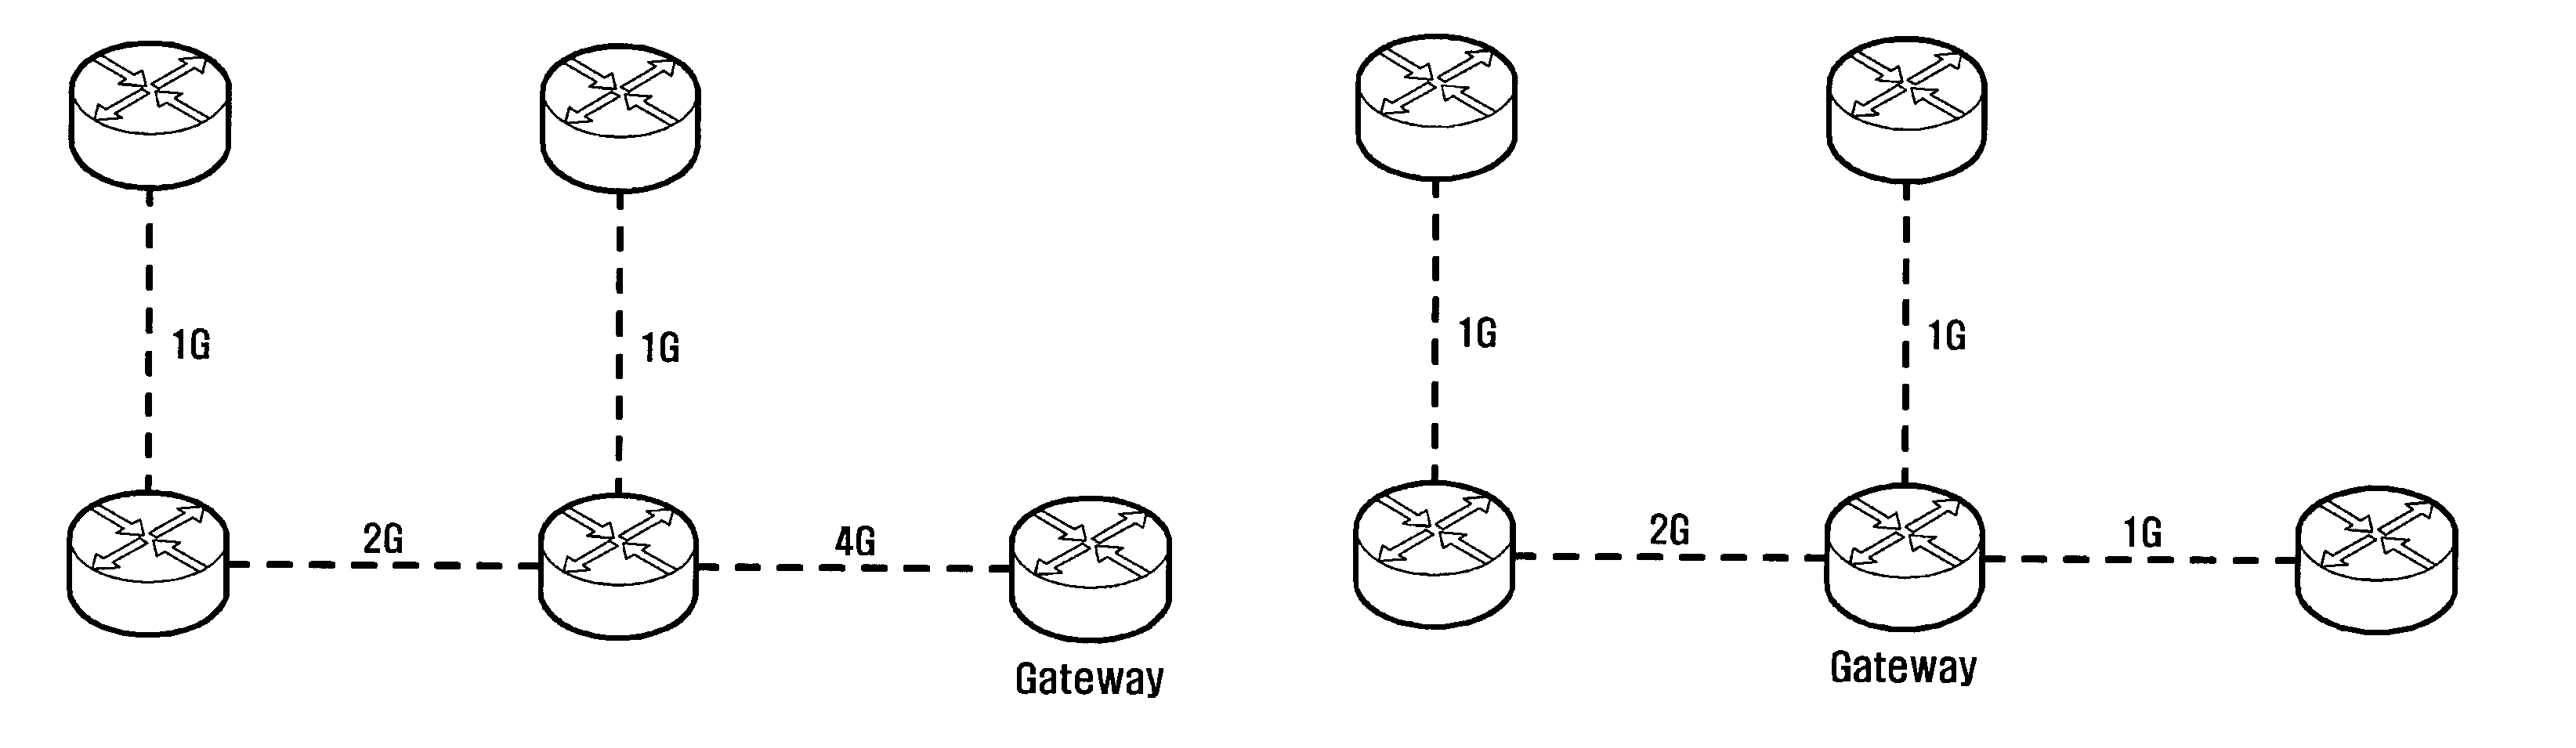 Gateway selection method for wireless mesh network